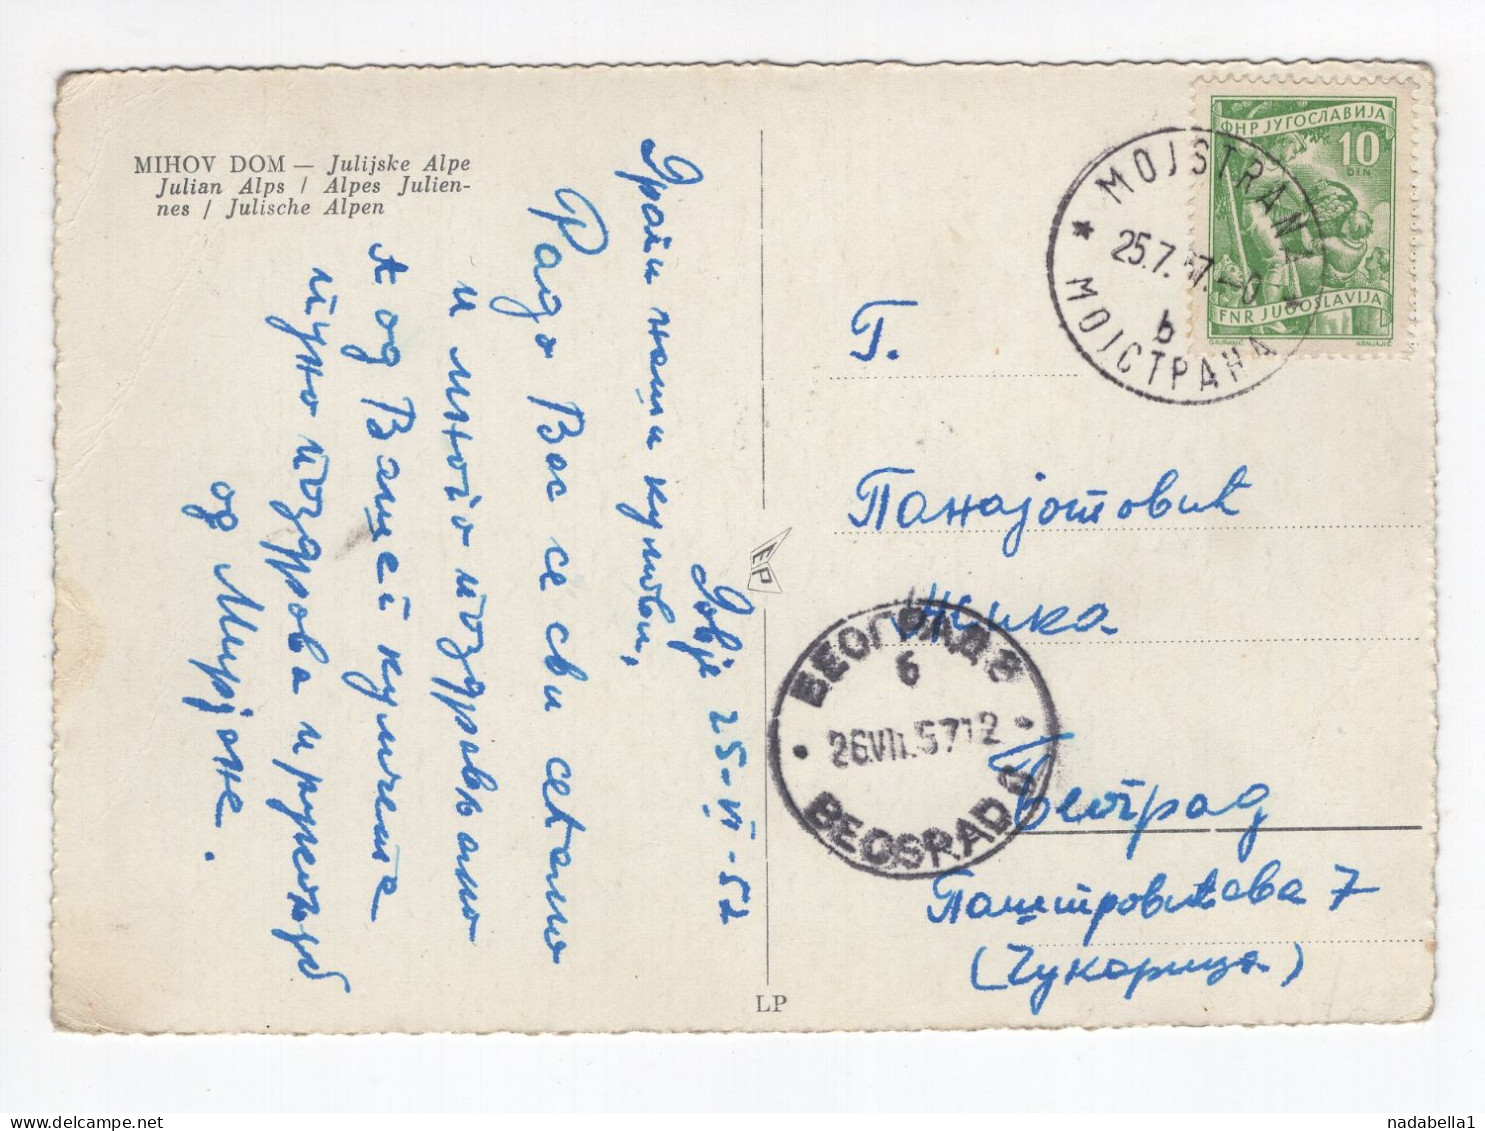 1952. YUGOSLAVIA,SLOVENIA,MOJSTRANA POSTMARK,MIHOV DOM,JULIAN ALPS,POSTCARD,USED - Jugoslawien